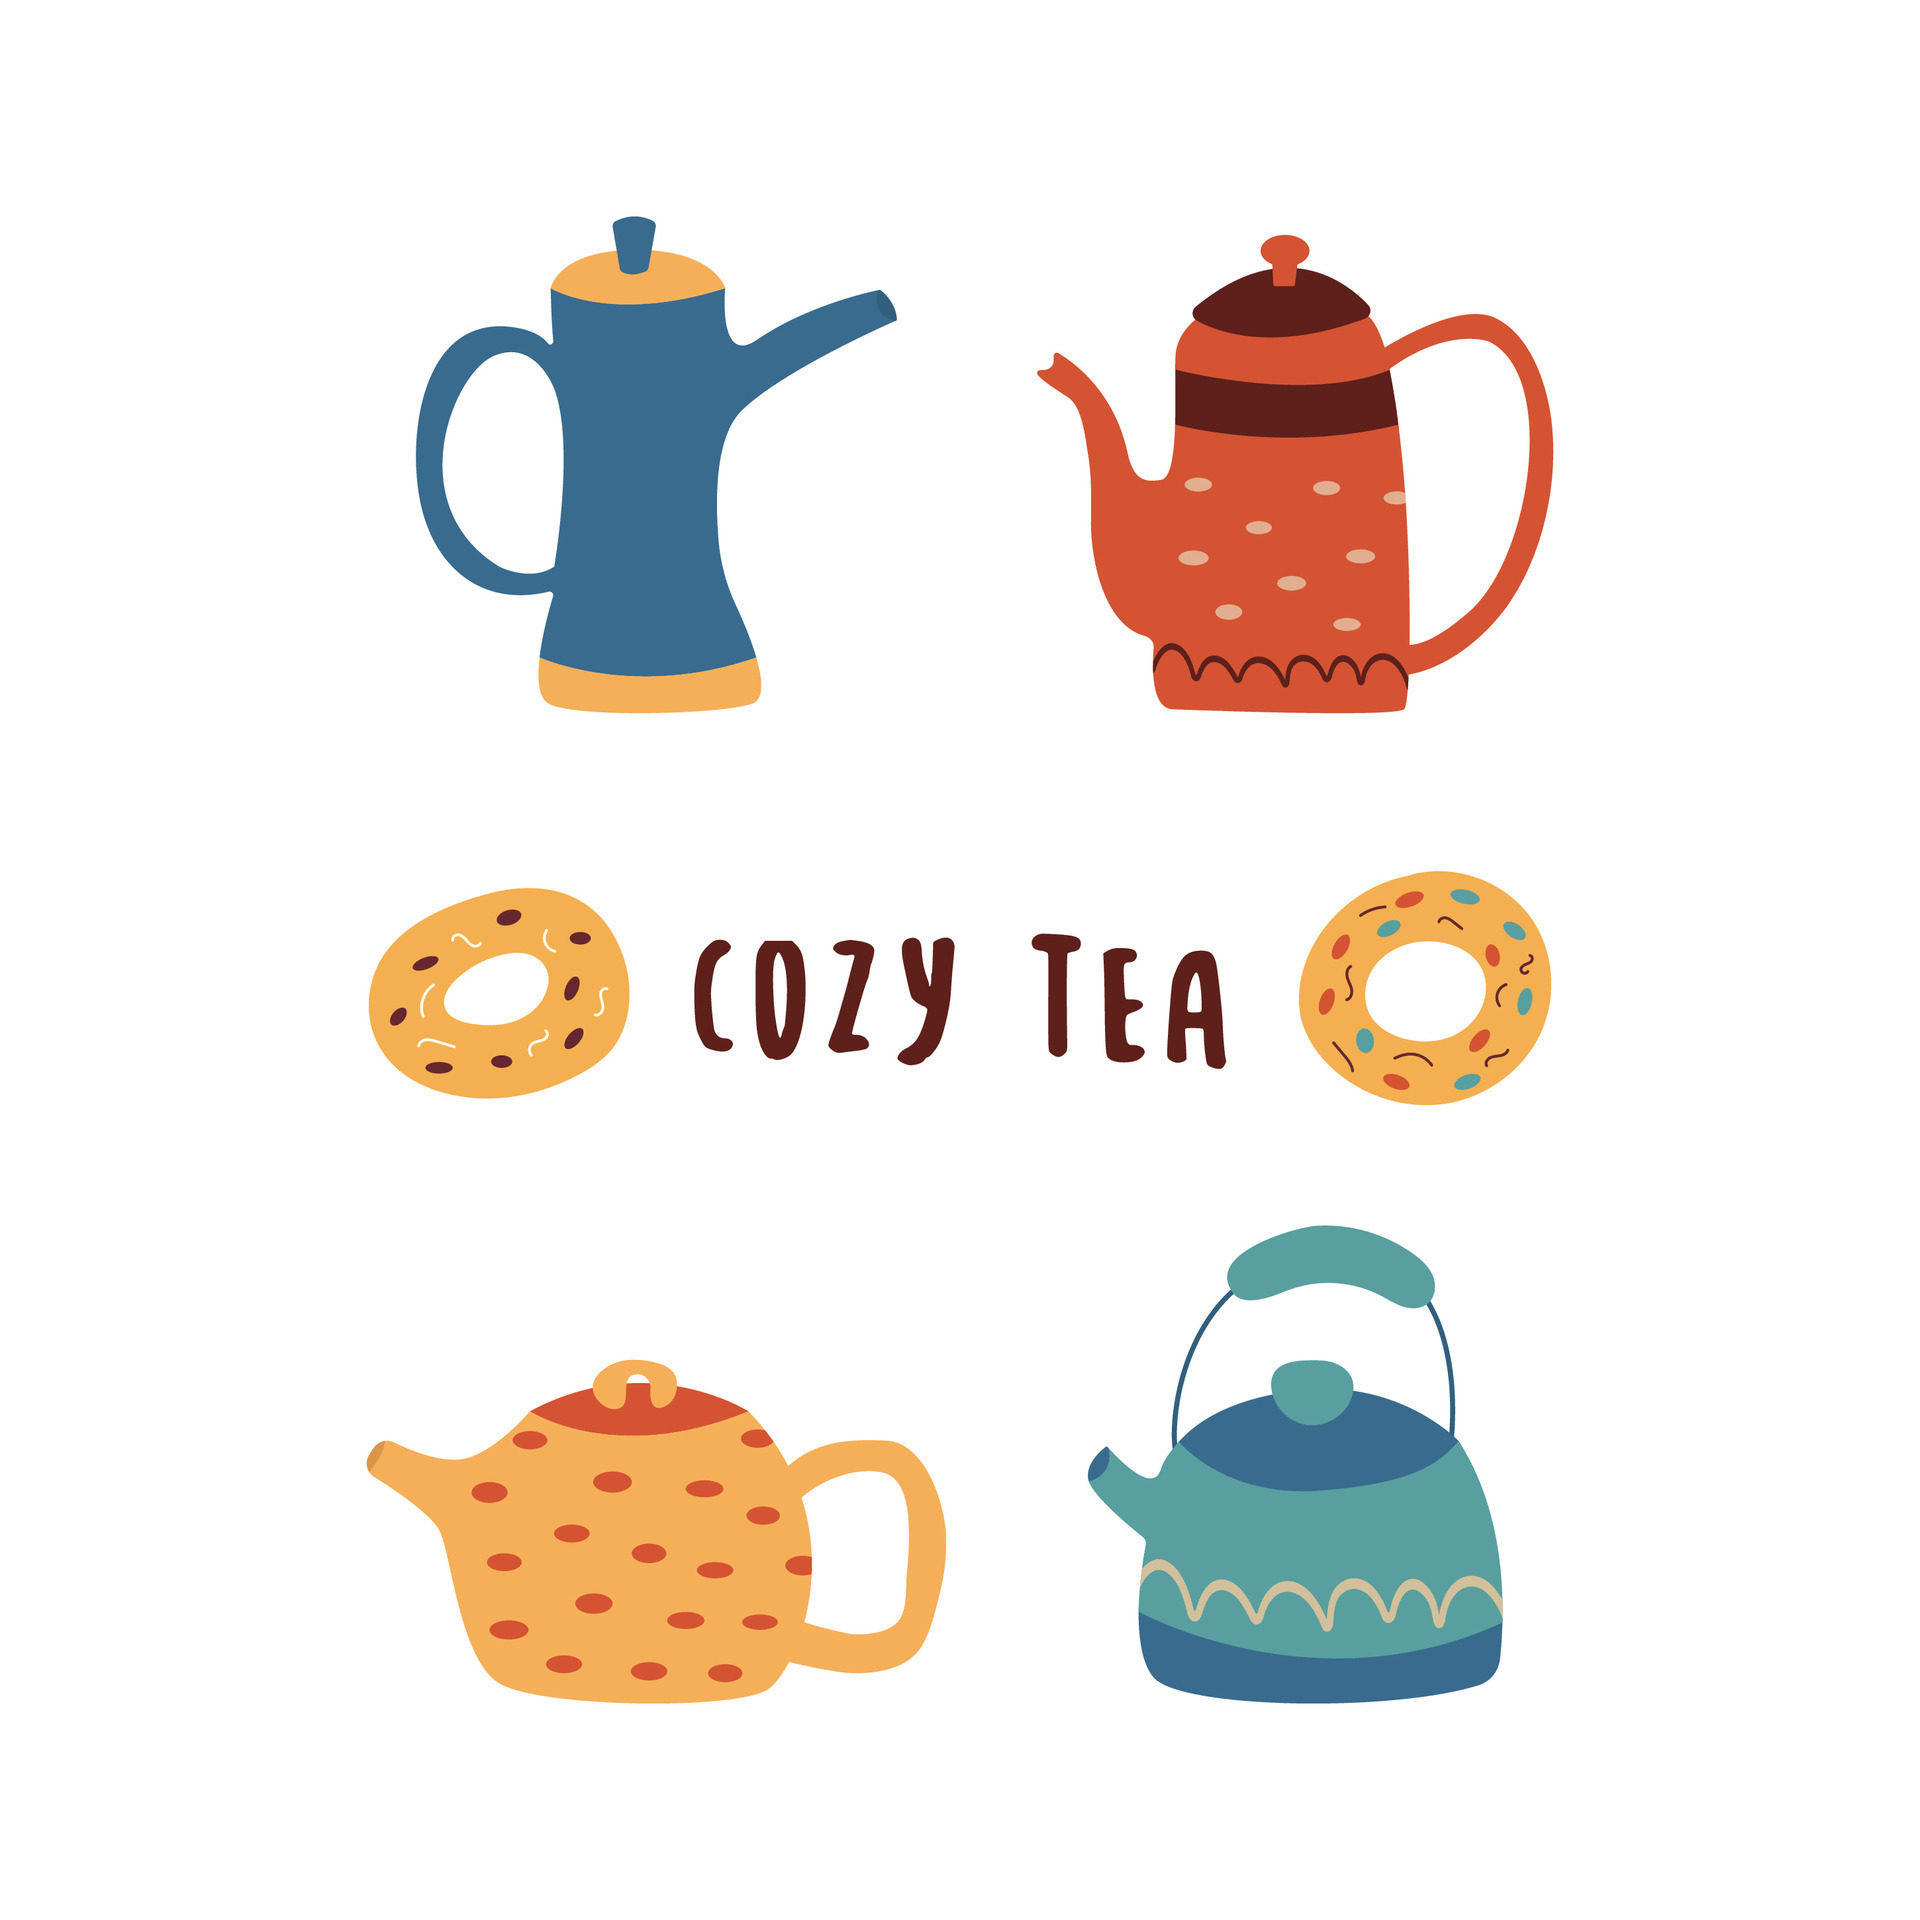 https://static.vecteezy.com/system/resources/previews/028/209/978/original/set-of-cute-teapots-with-donuts-cozy-tea-vector.jpg